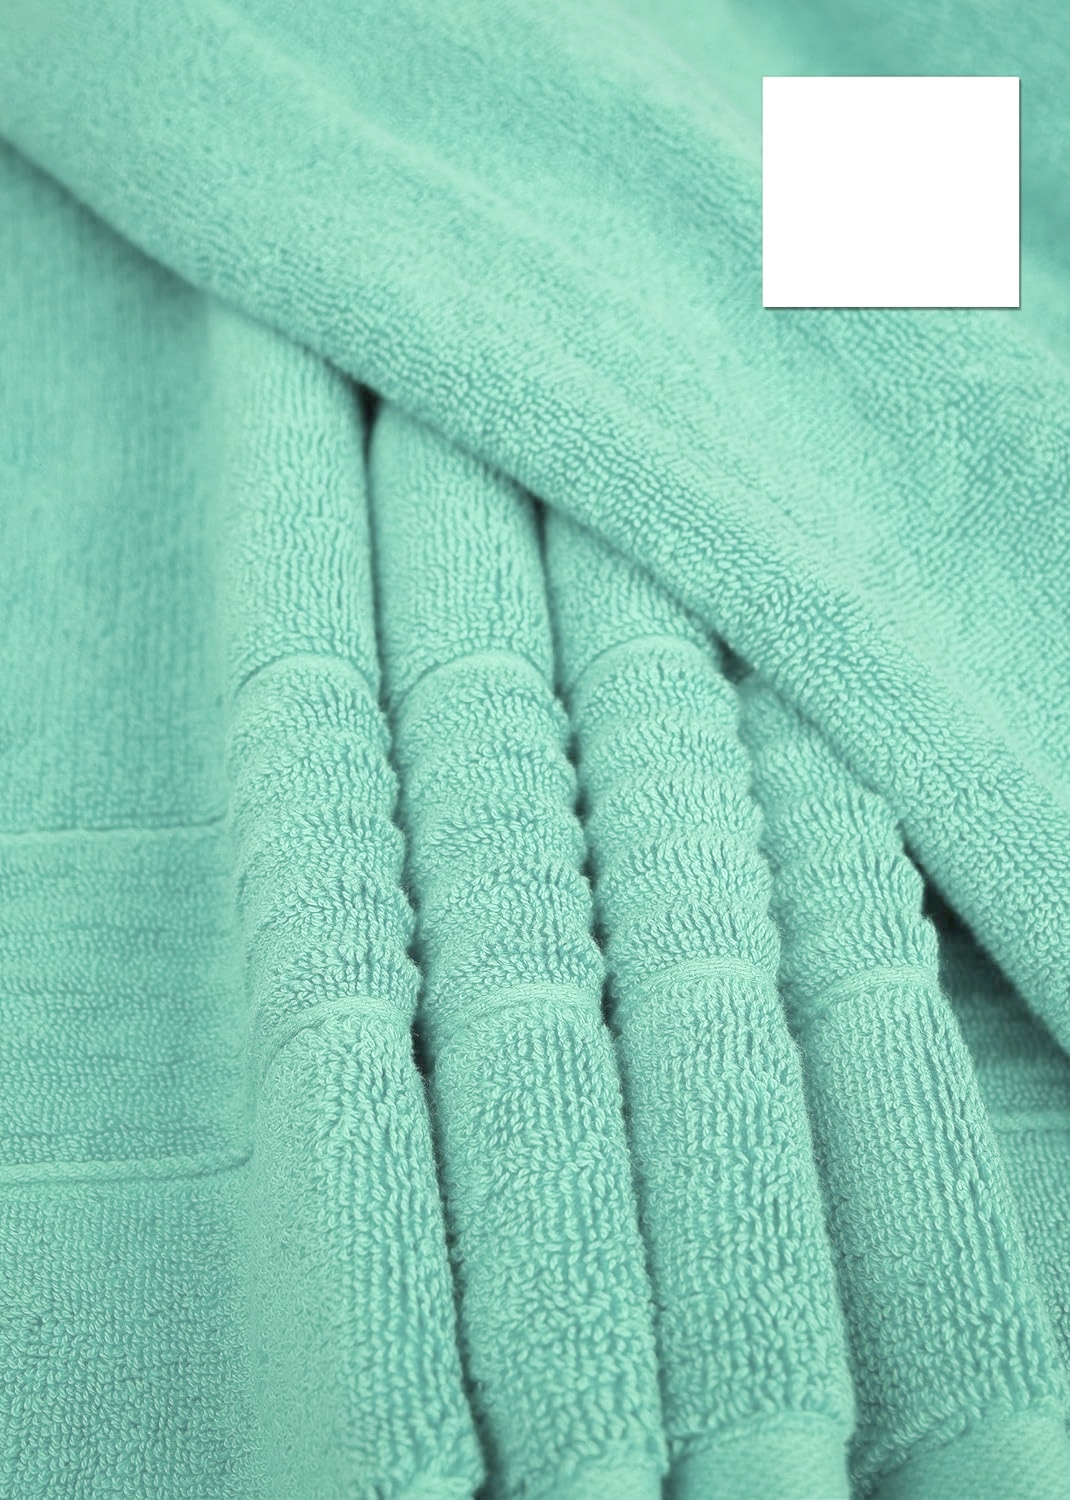 Premium Jumbo Bath Towels - Extra Large 80 x 180cm, 500GSM Egyptian Cotton